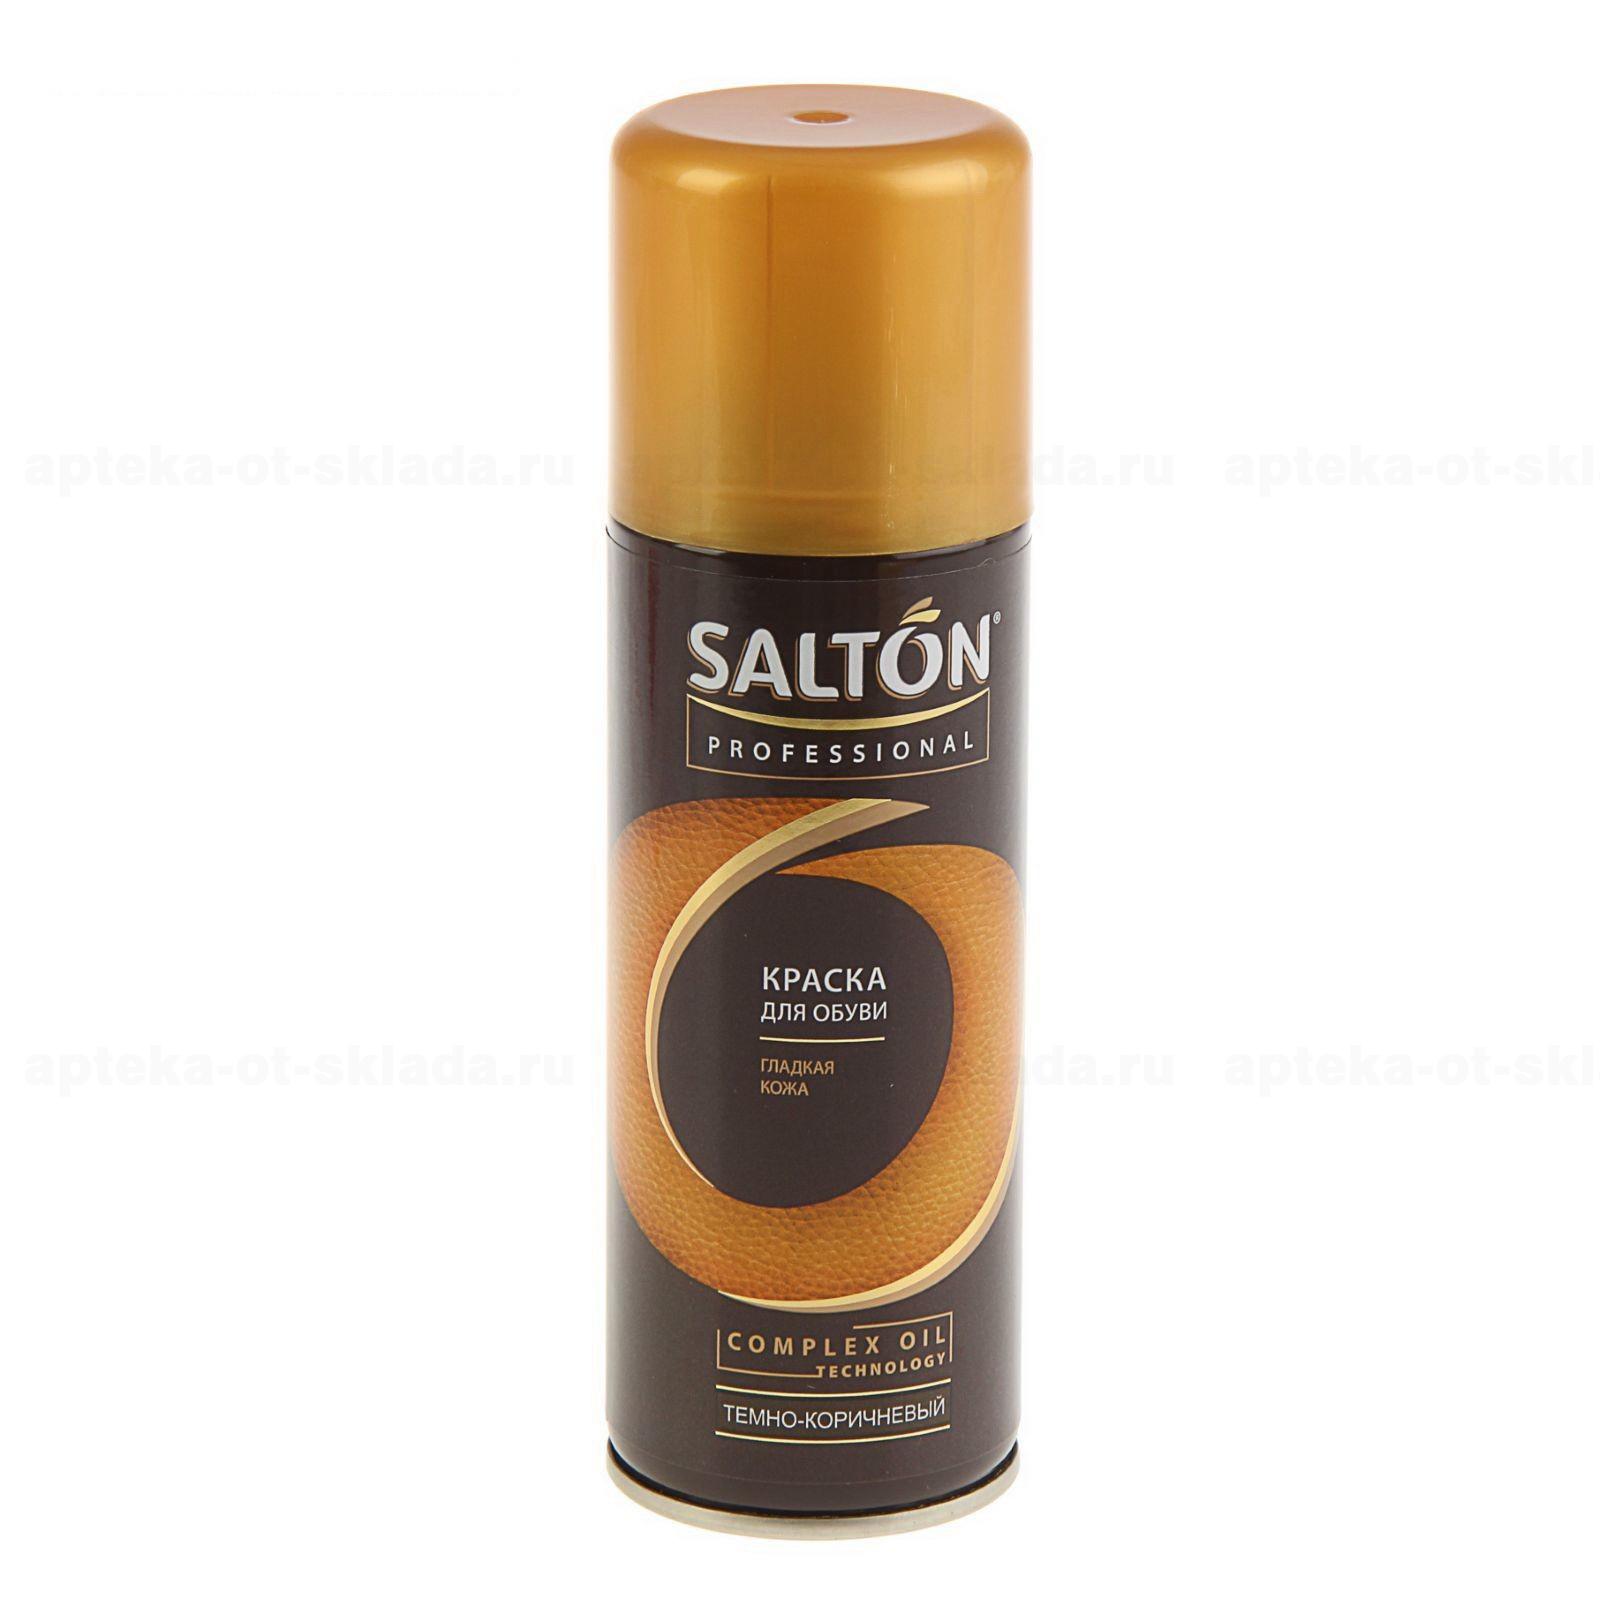 Salton краска для обуви для гладкой кожи цвет темно-коричневый 200мл аэрозоль